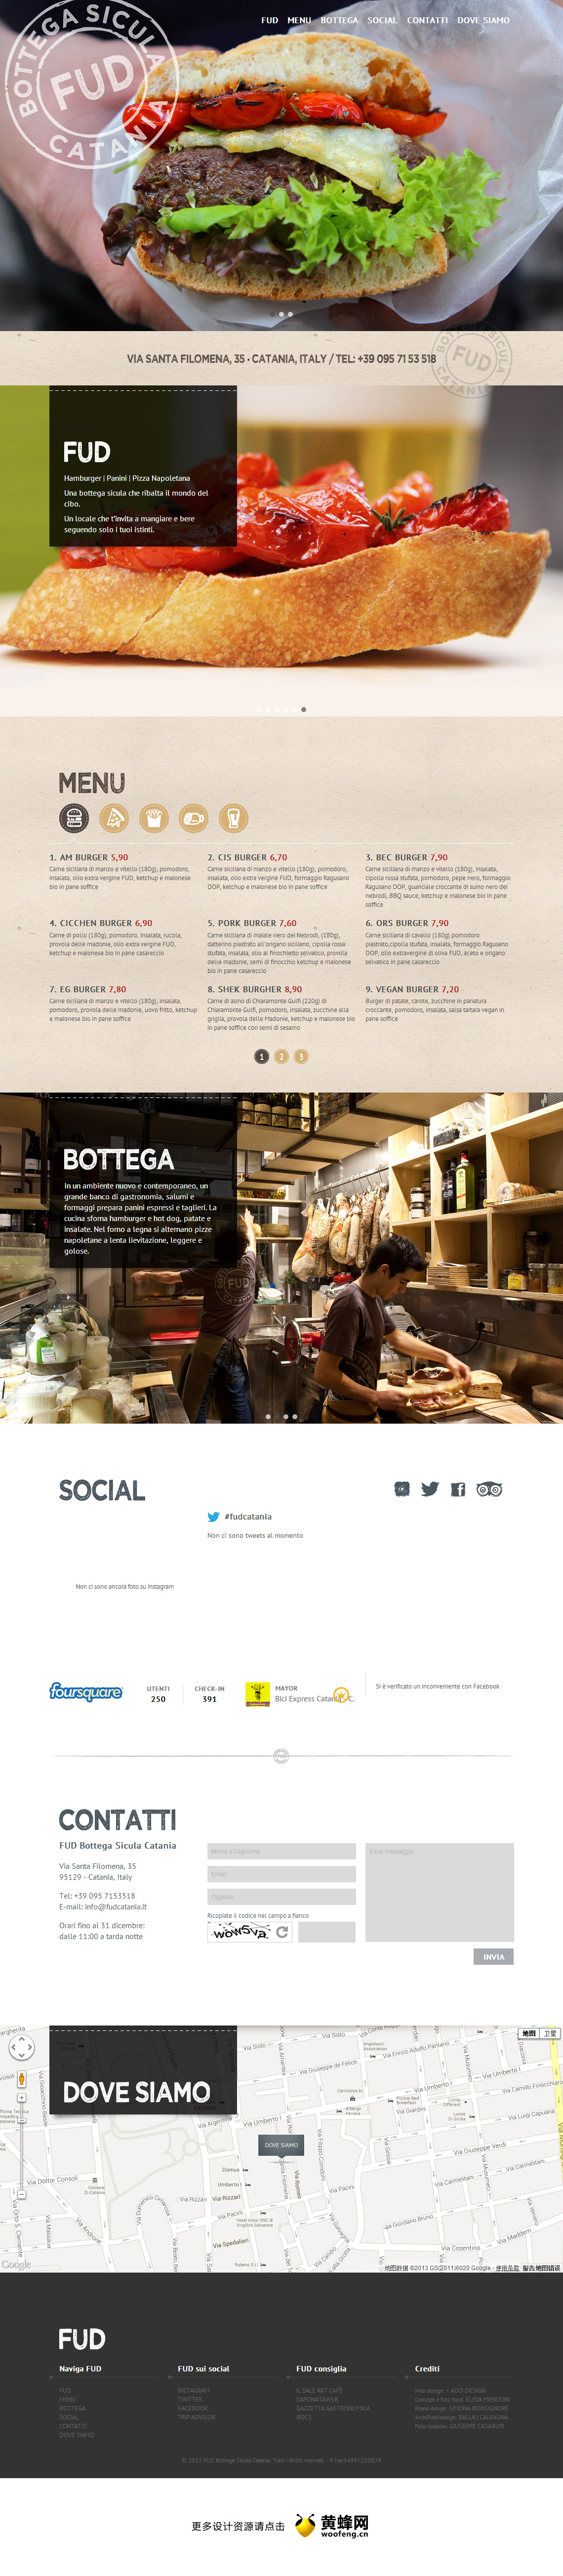 FUD Bottega Sicula餐厅网站，来源自黄蜂网https://woofeng.cn/